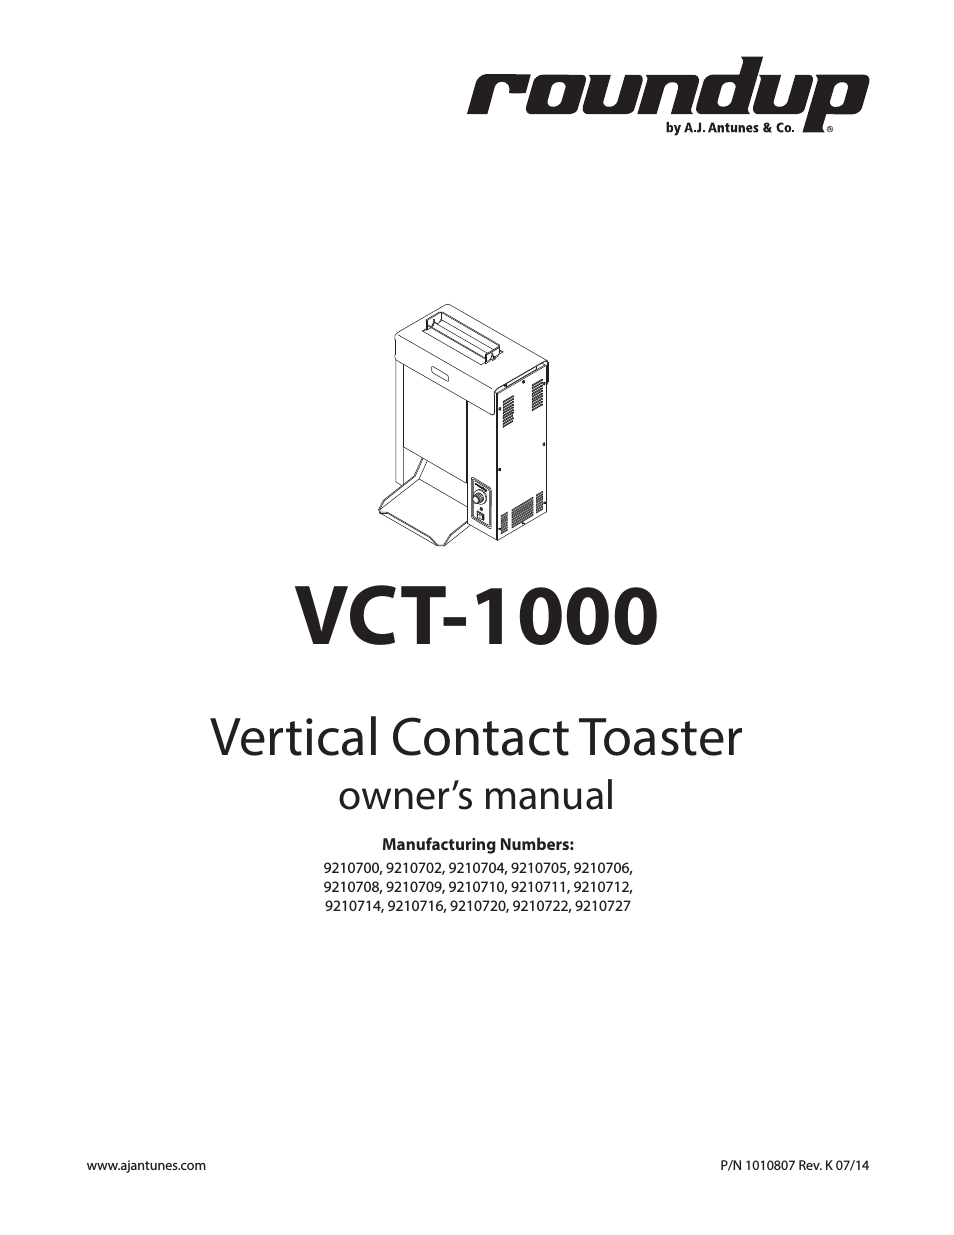 VCT-1000 9210708